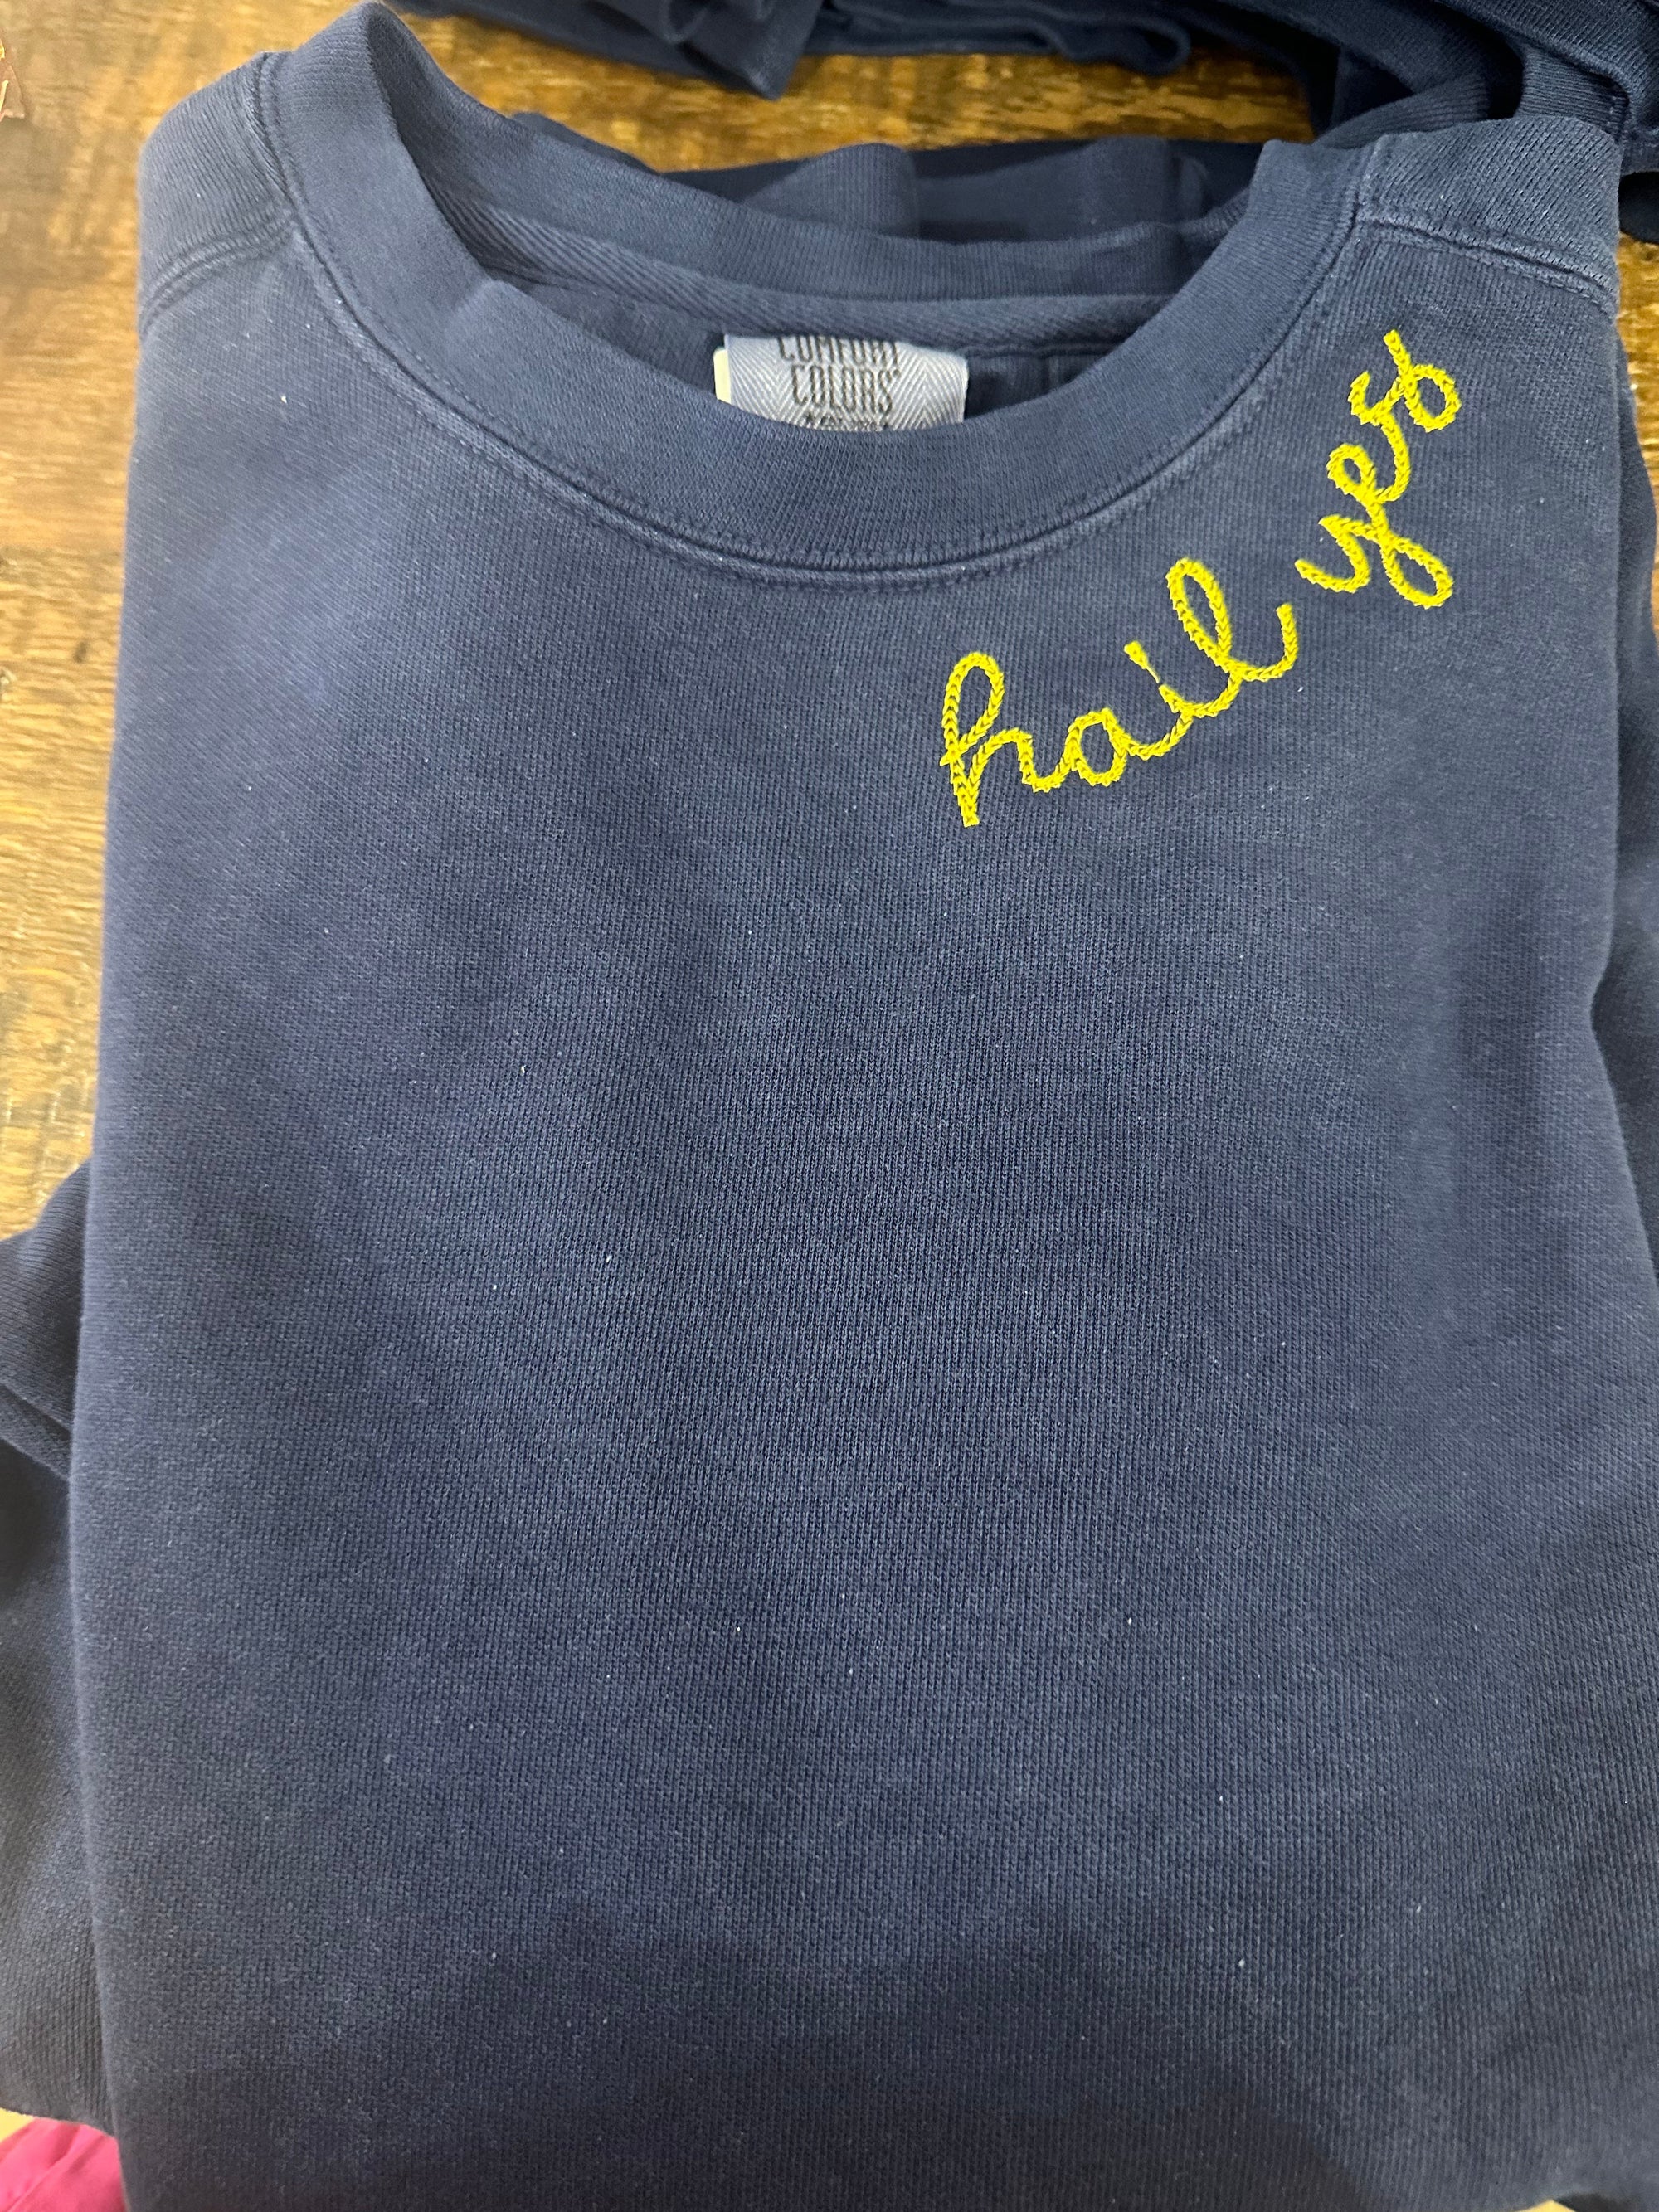 Hail Yes Embroidered Sweatshirt